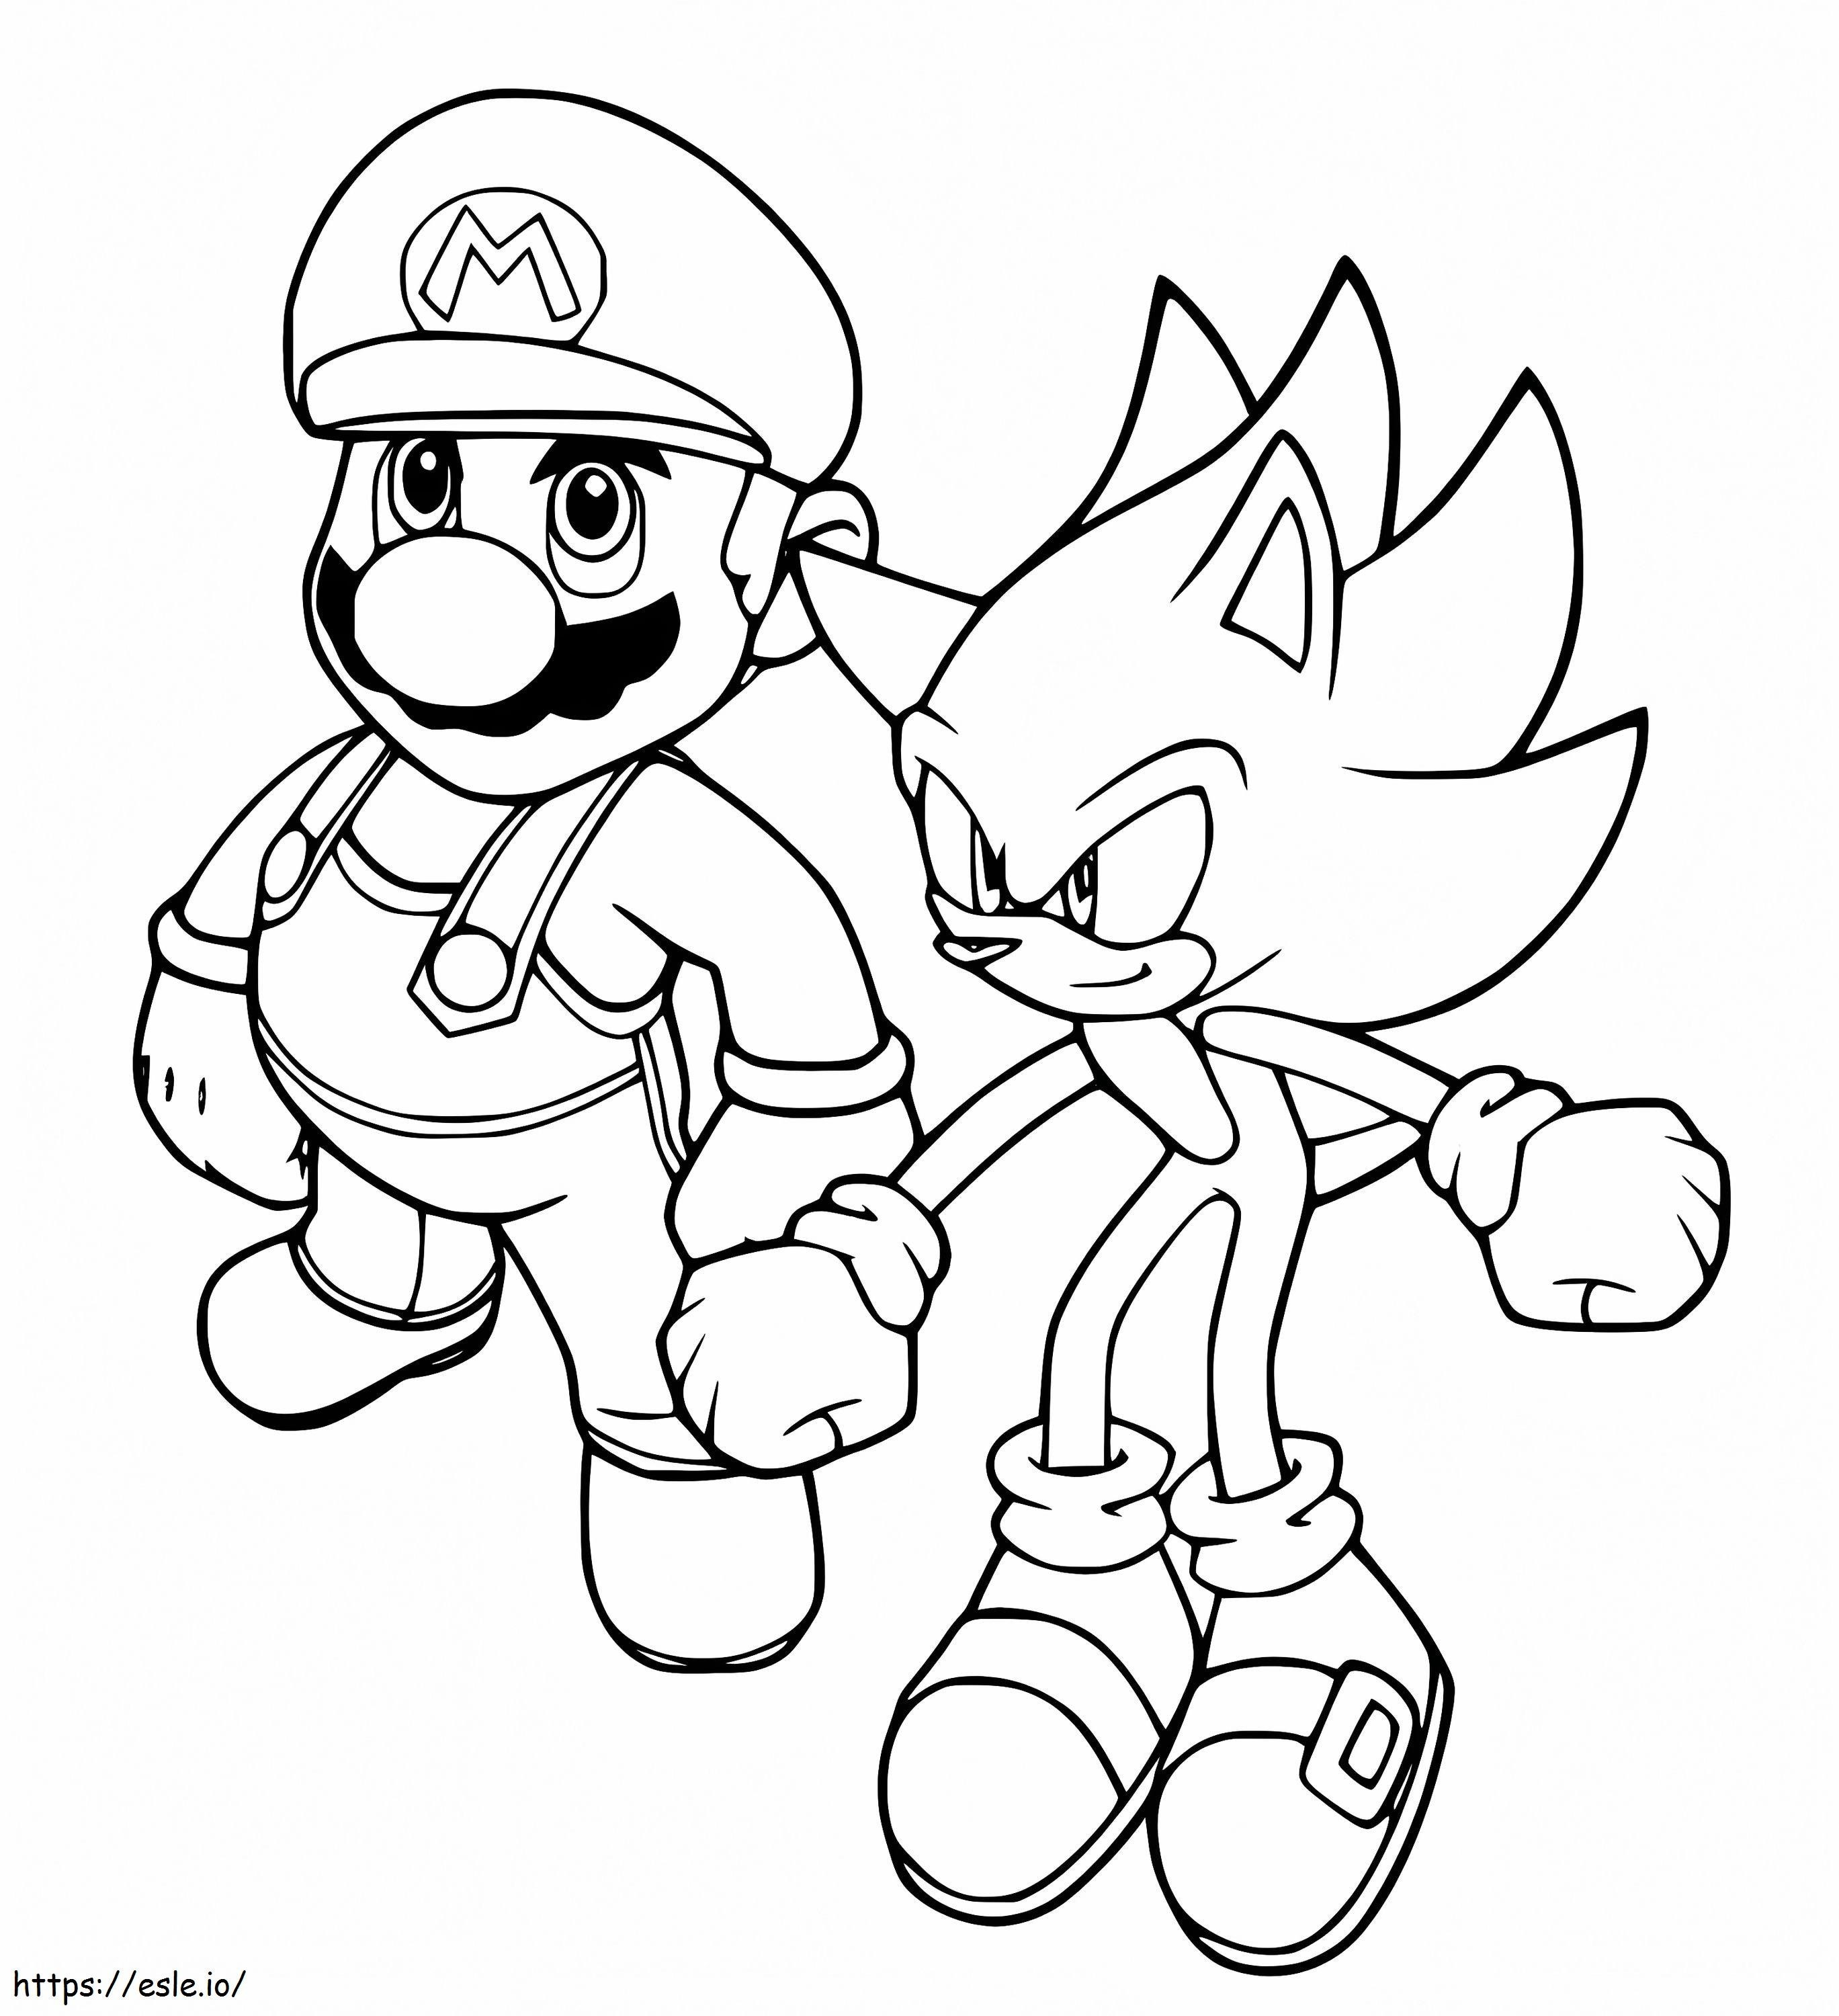 Coloriage Mario et Sonic à imprimer dessin